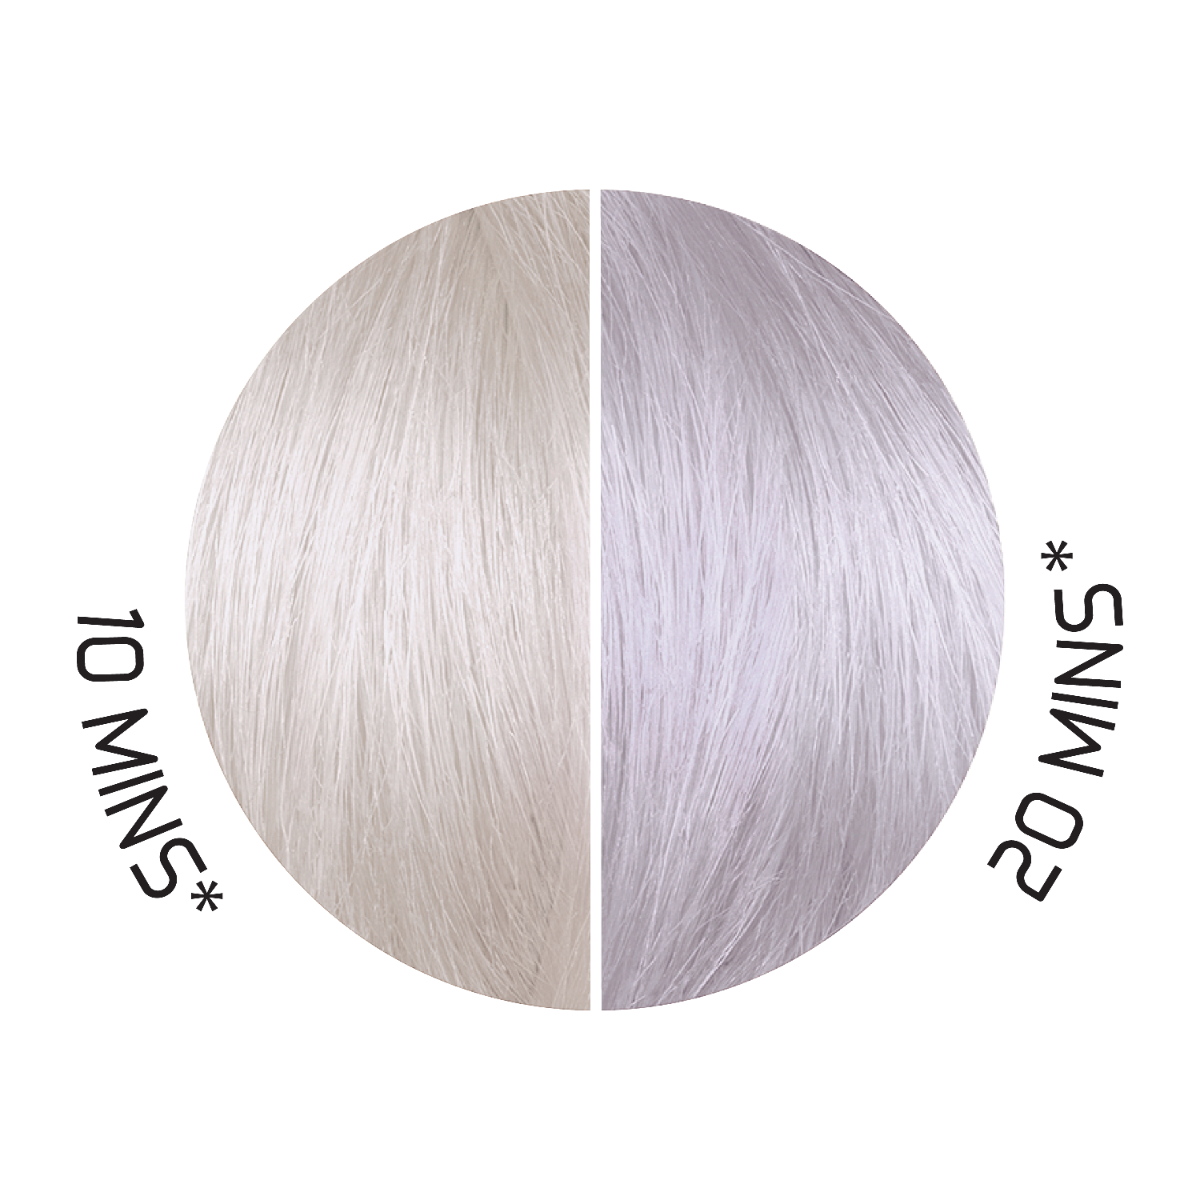 Swatch of Splat Hair Color's Toners Platinum Blonde Hair Dye